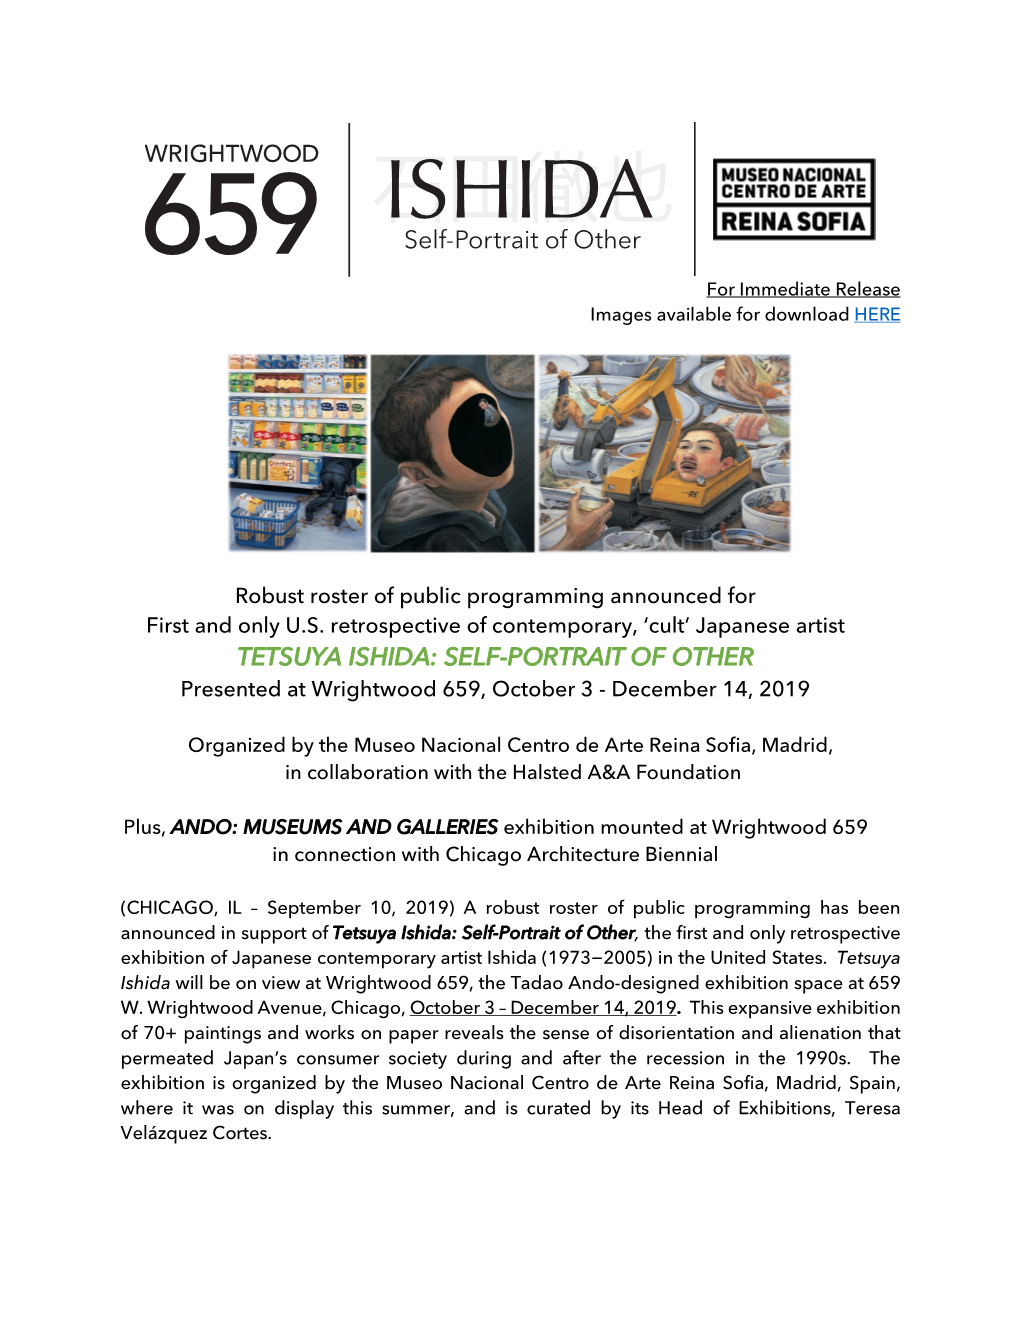 TETSUYA ISHIDA: SELF-PORTRAIT of OTHER Presented at Wrightwood 659, October 3 - December 14, 2019